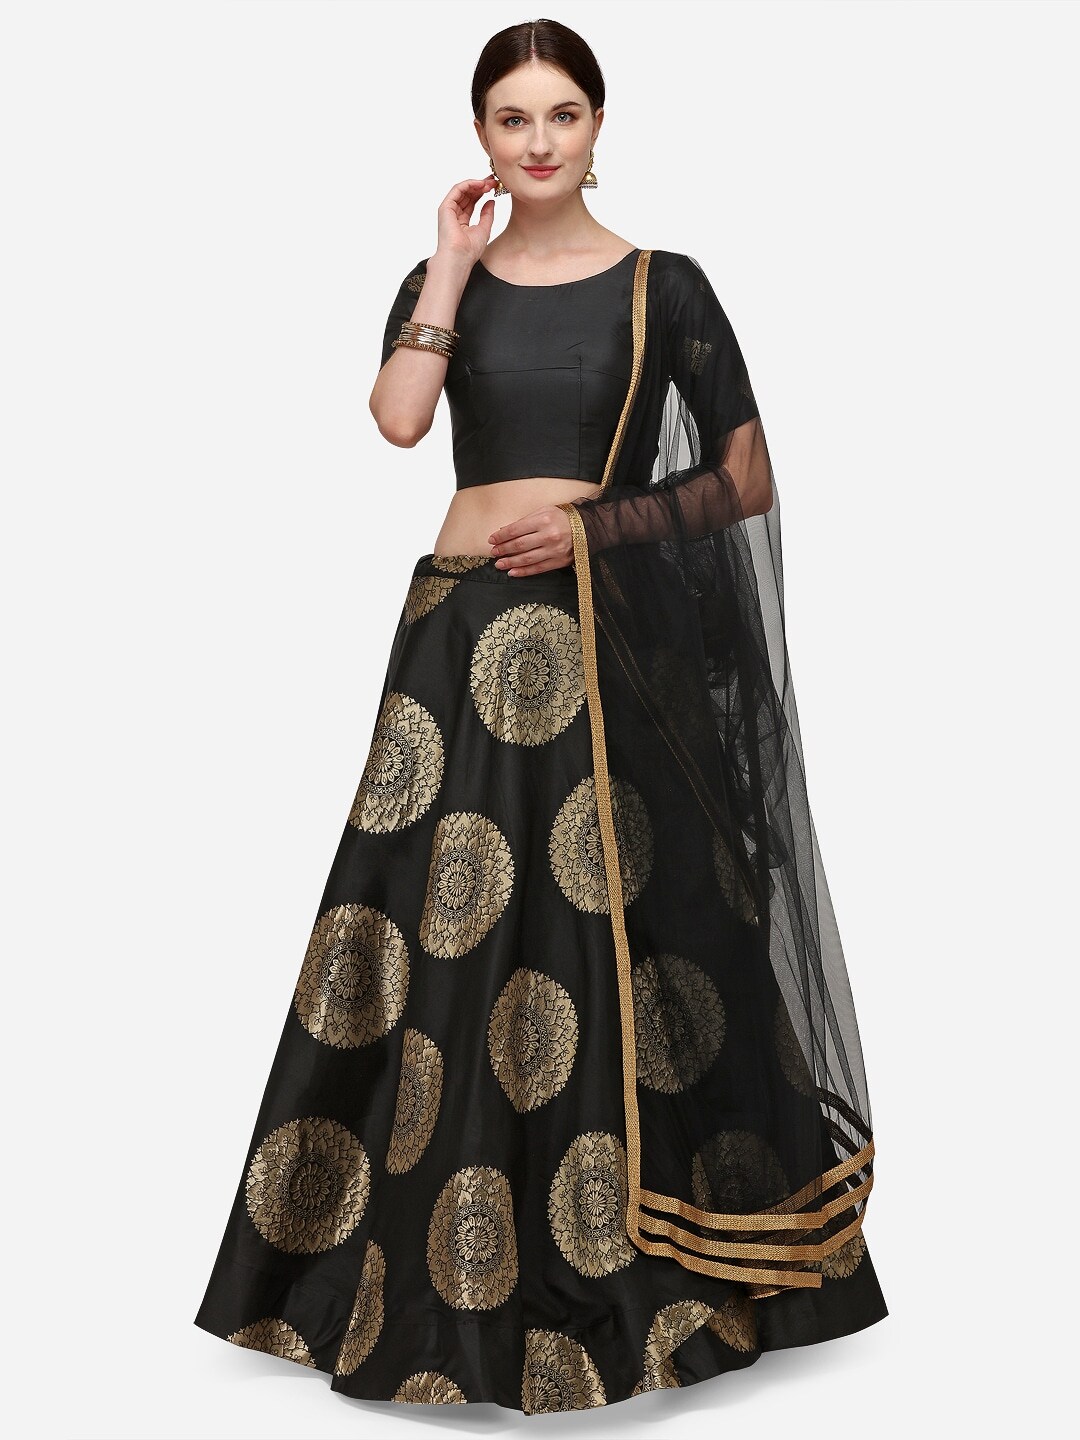 LOOKNBOOK ART Black & Gold-Toned Semi-Stitched Jacquard Banarasi Silk Lehenga Choli Price in India